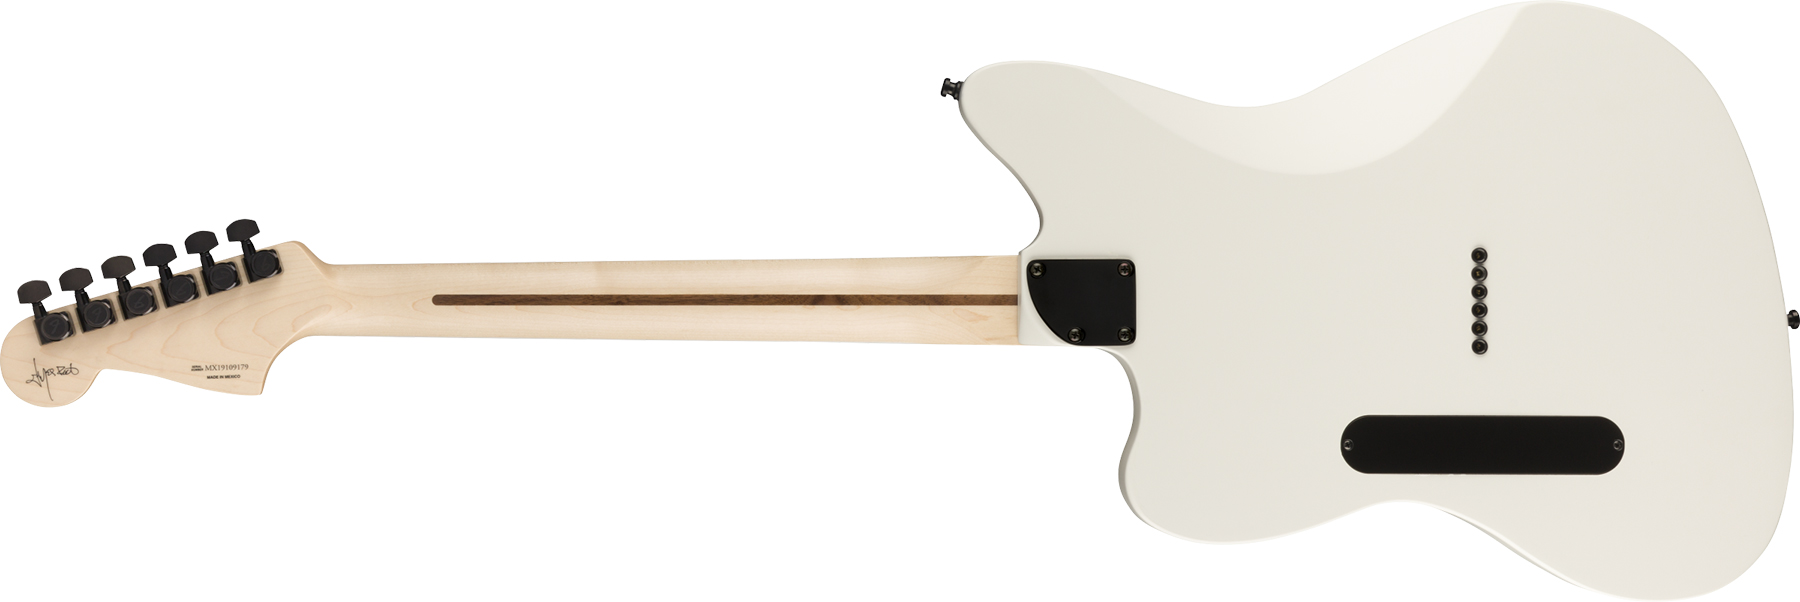 Fender Jim Root Jazzmaster V4 Mex Signature Hh Emg Ht Eb - Artic White - Guitarra electrica retro rock - Variation 1